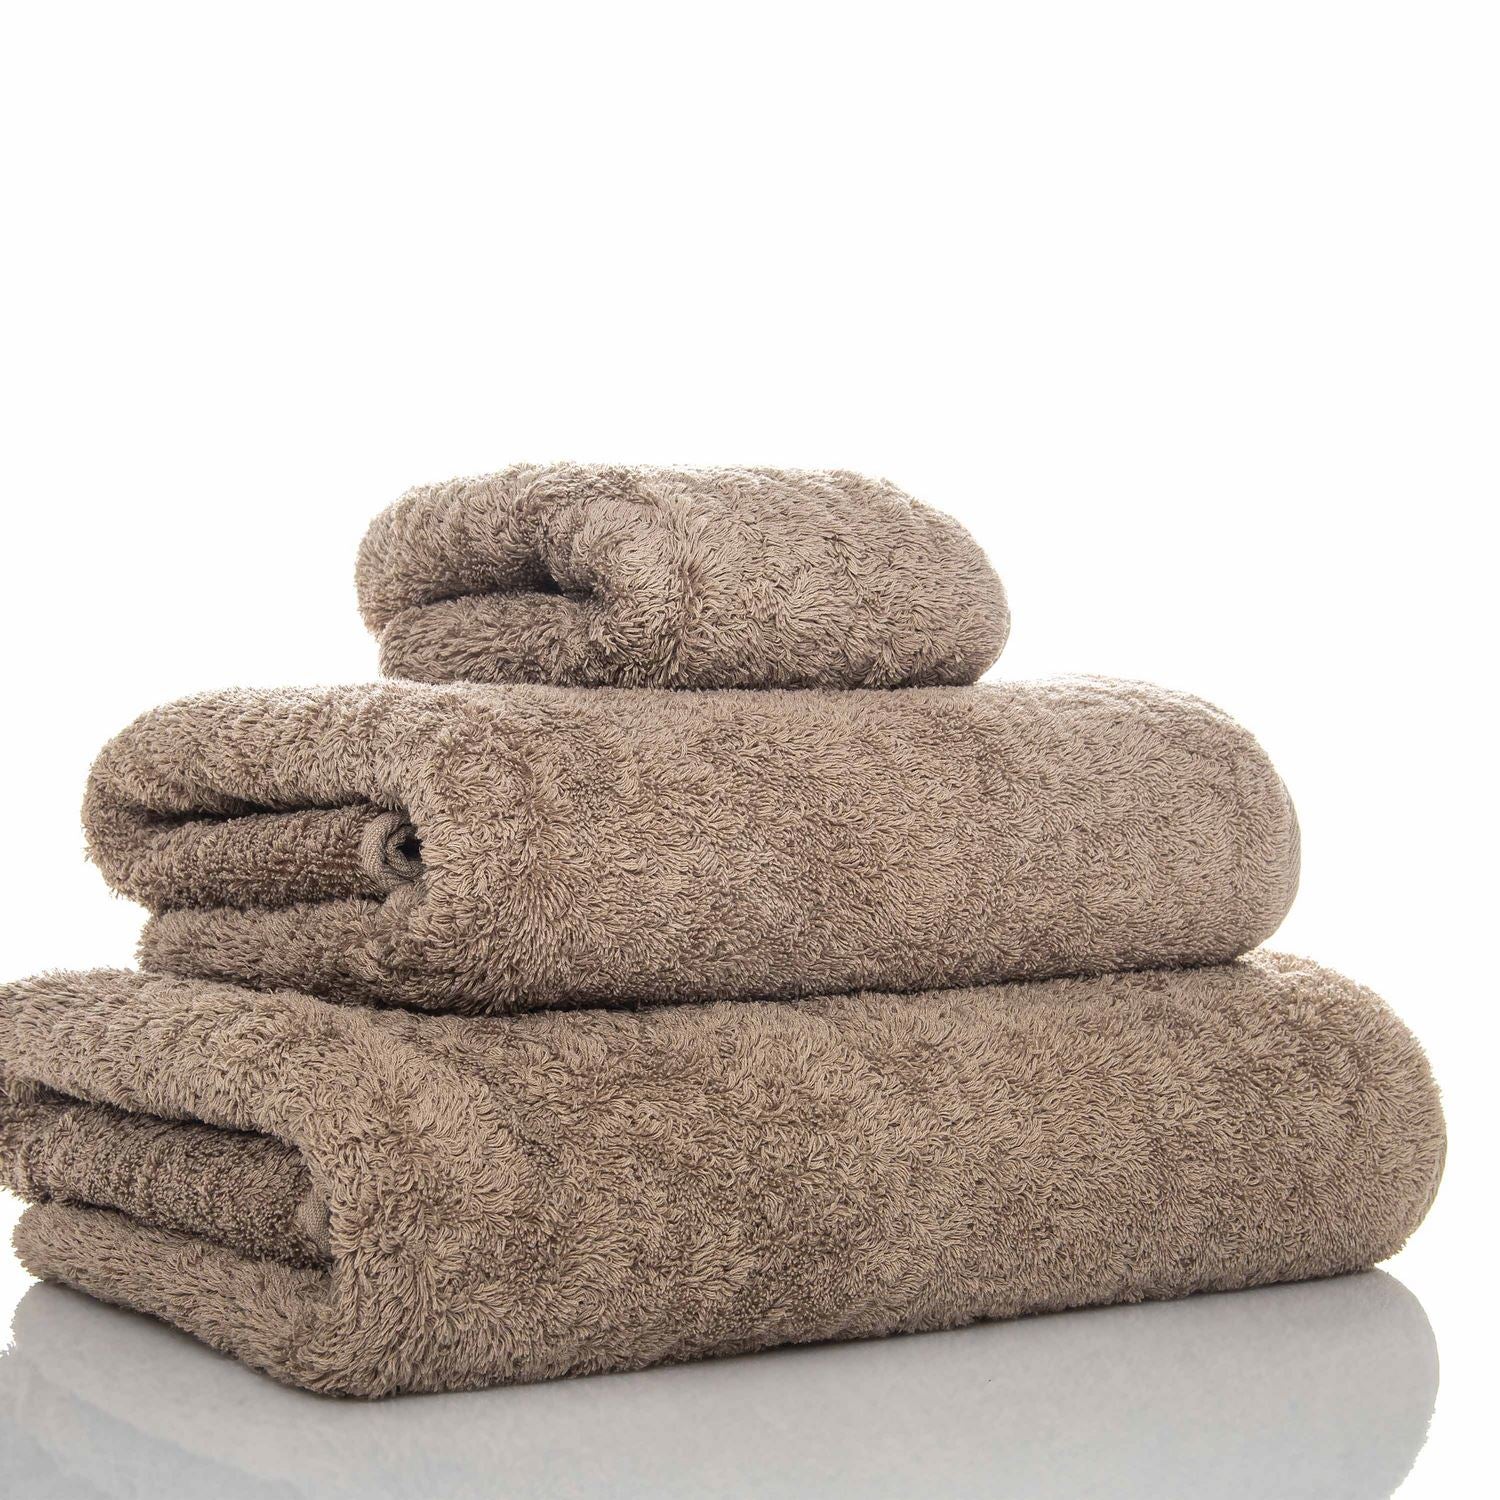 Graccioza Long Double Loop Bath Towels - Blush